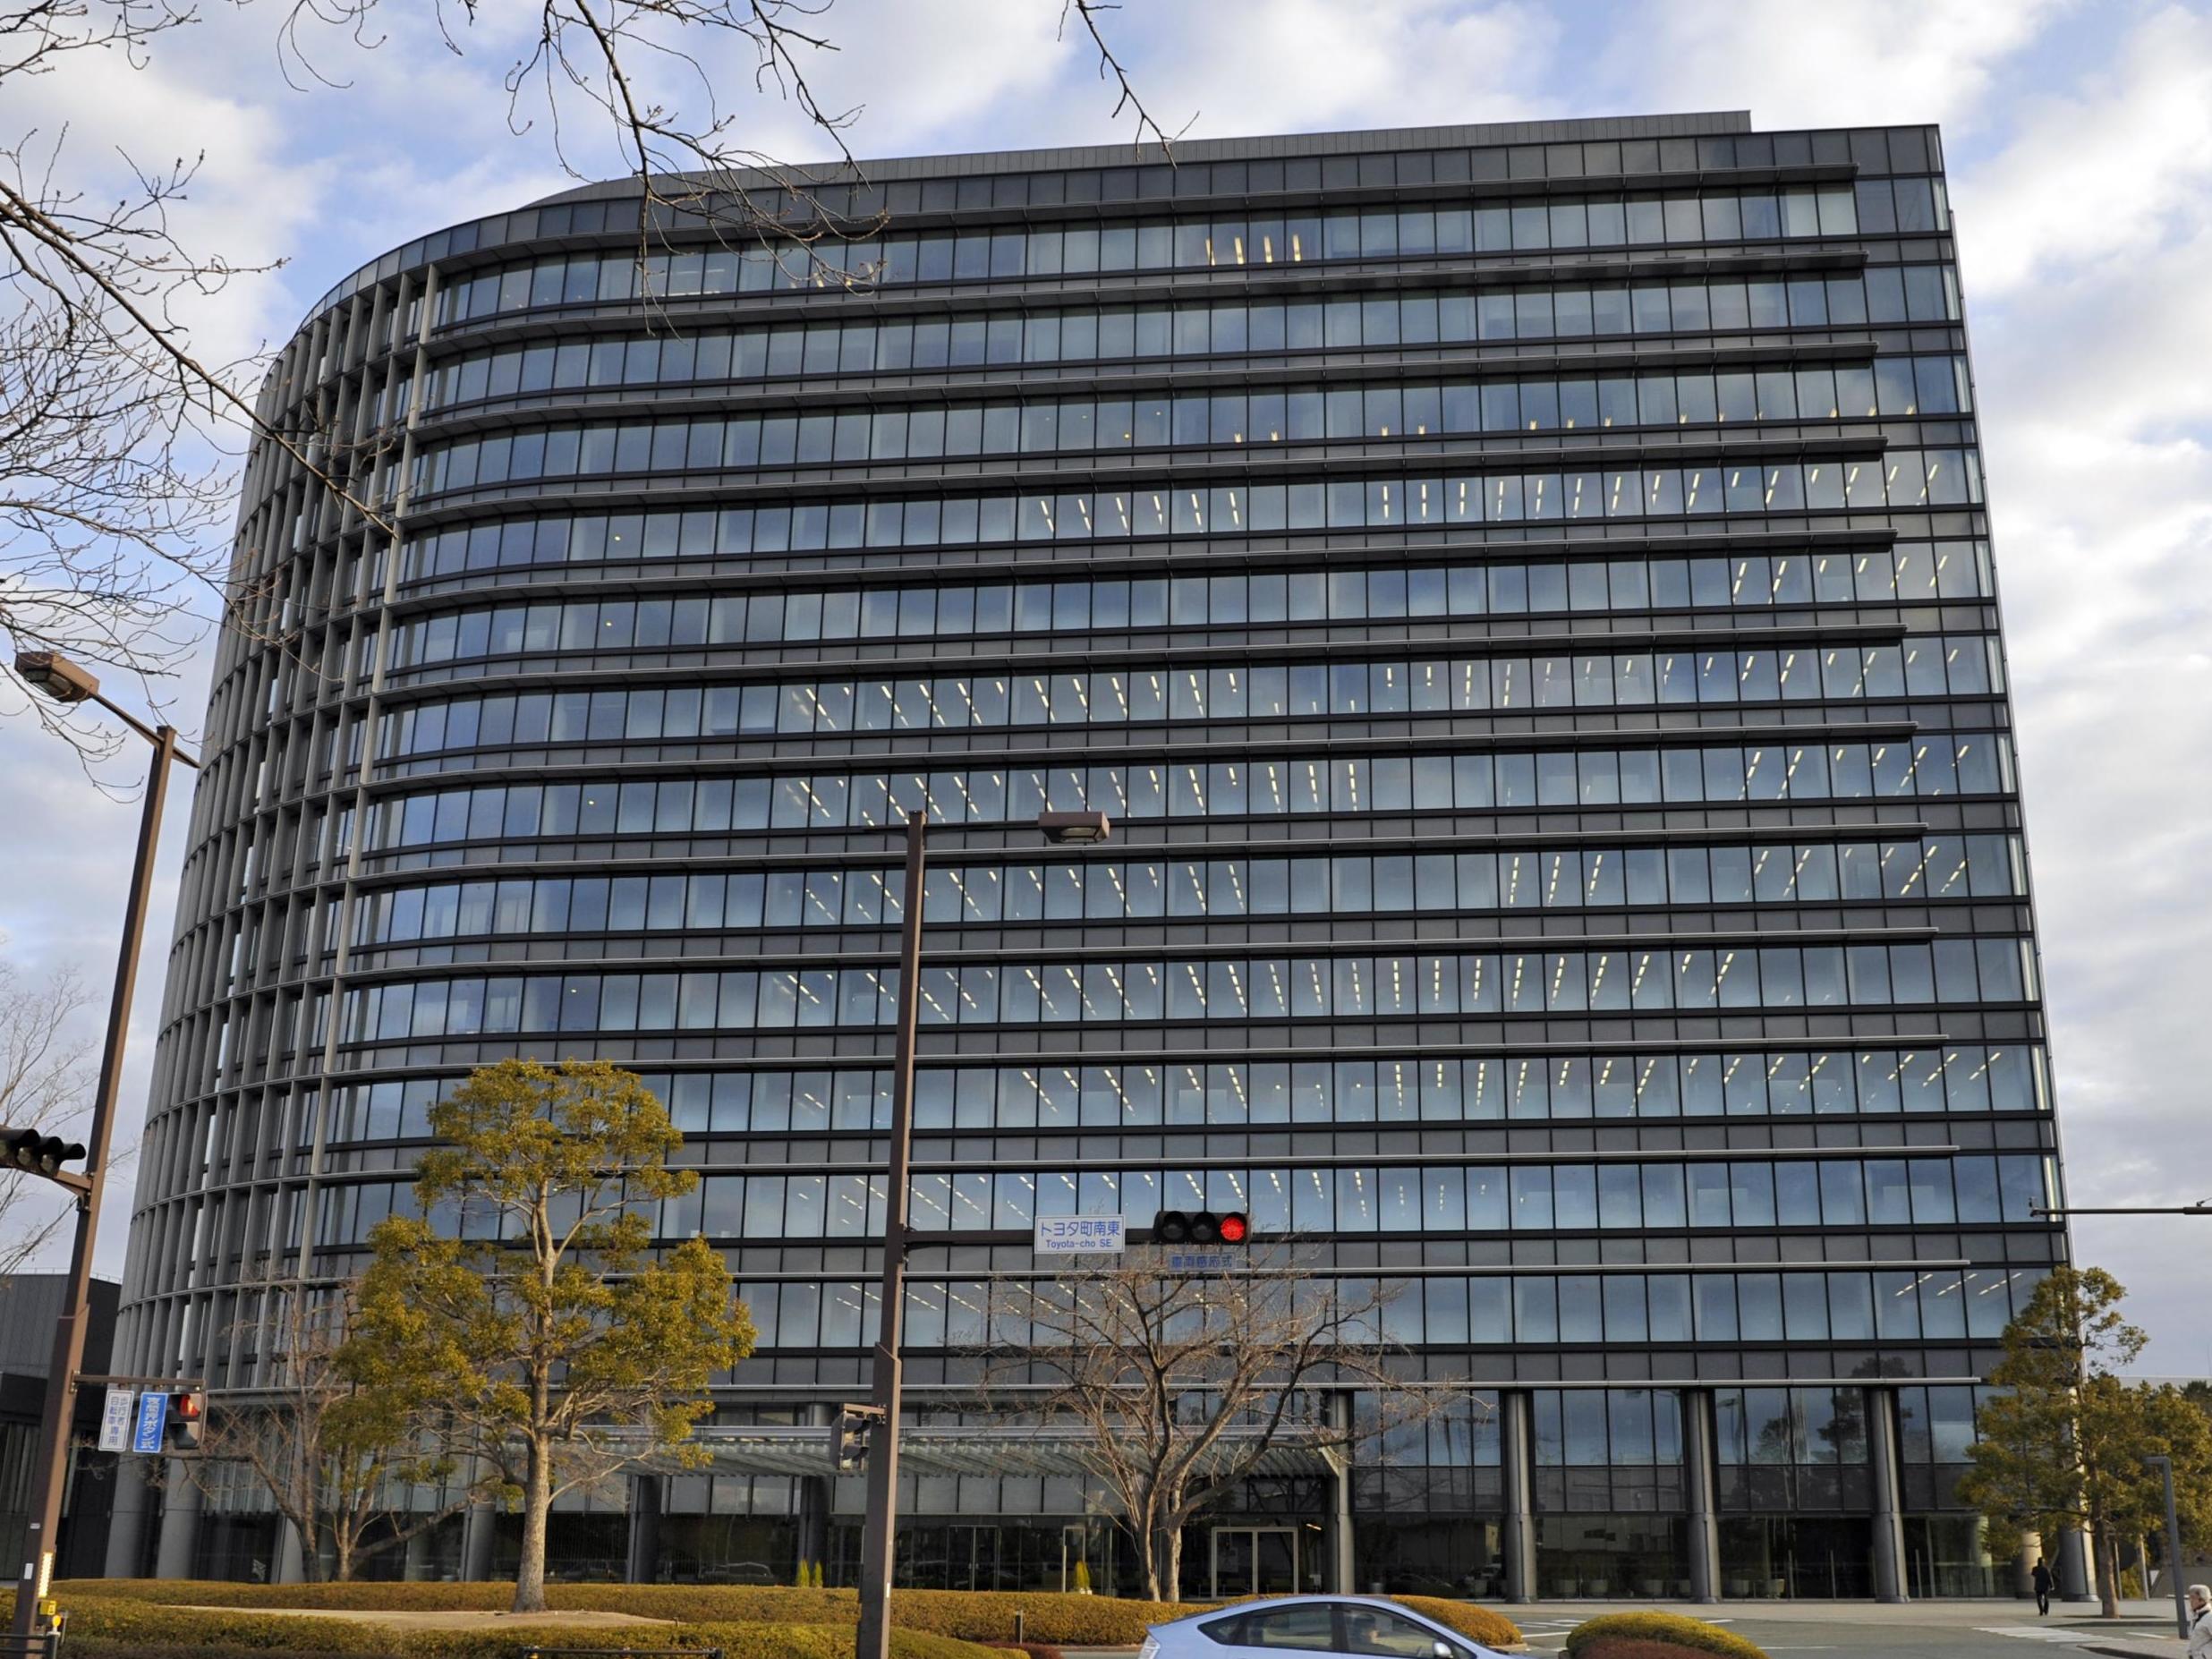 Toyota's headquarters in Toyota city, Japan